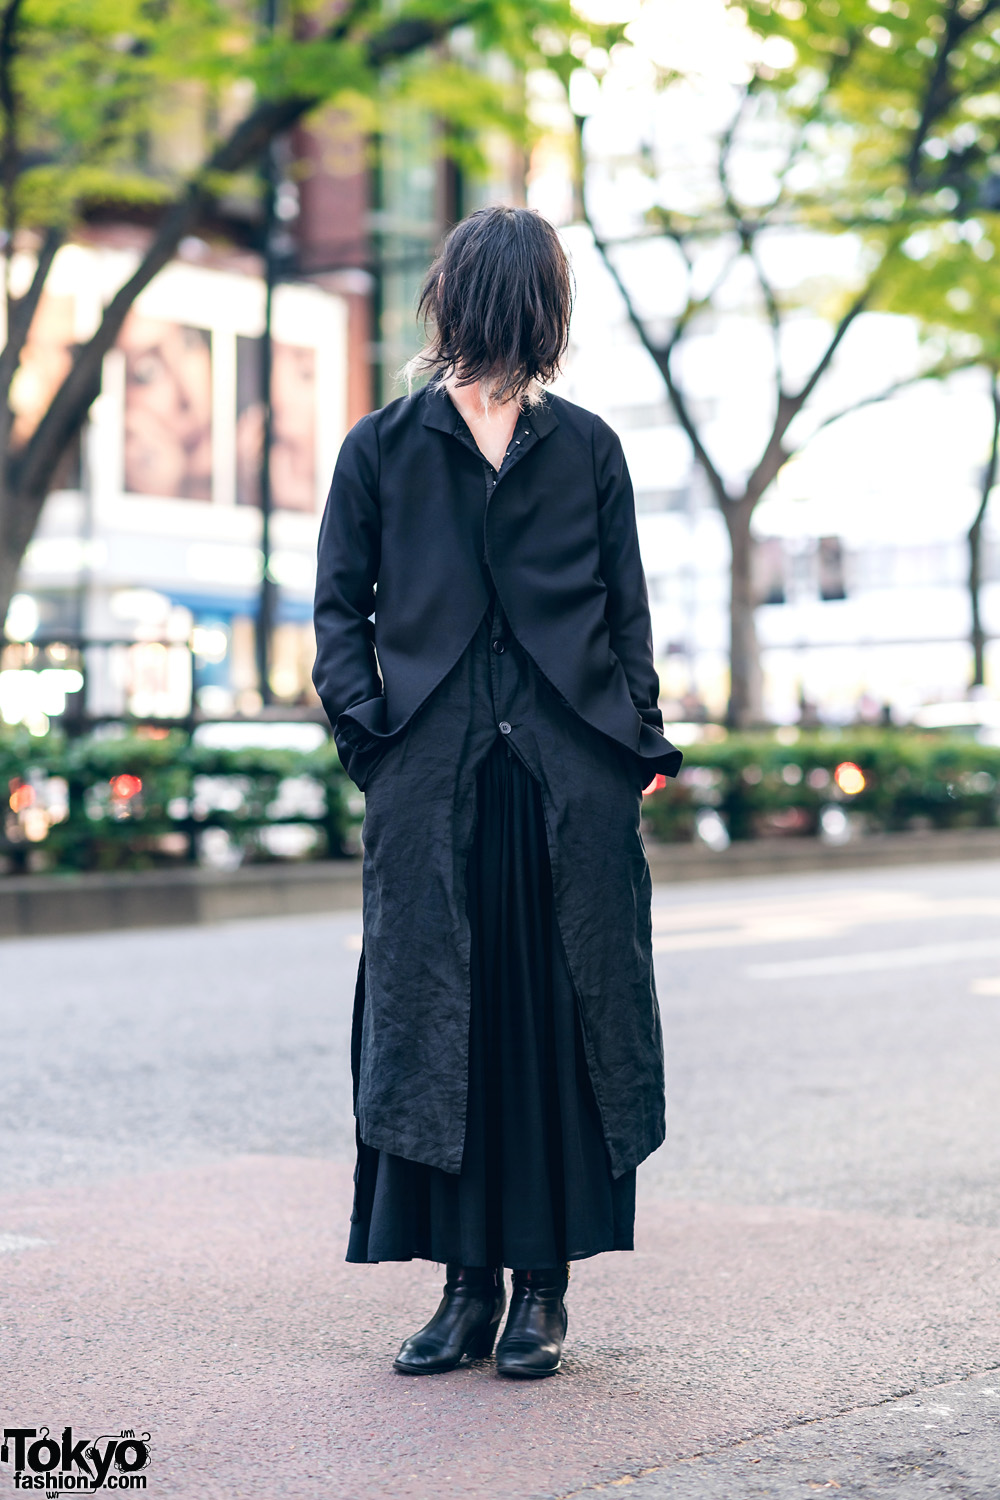 Minimalist Fashion & Long Bangs Hairstyle in Tokyo w/ Marc Le Bihan ...